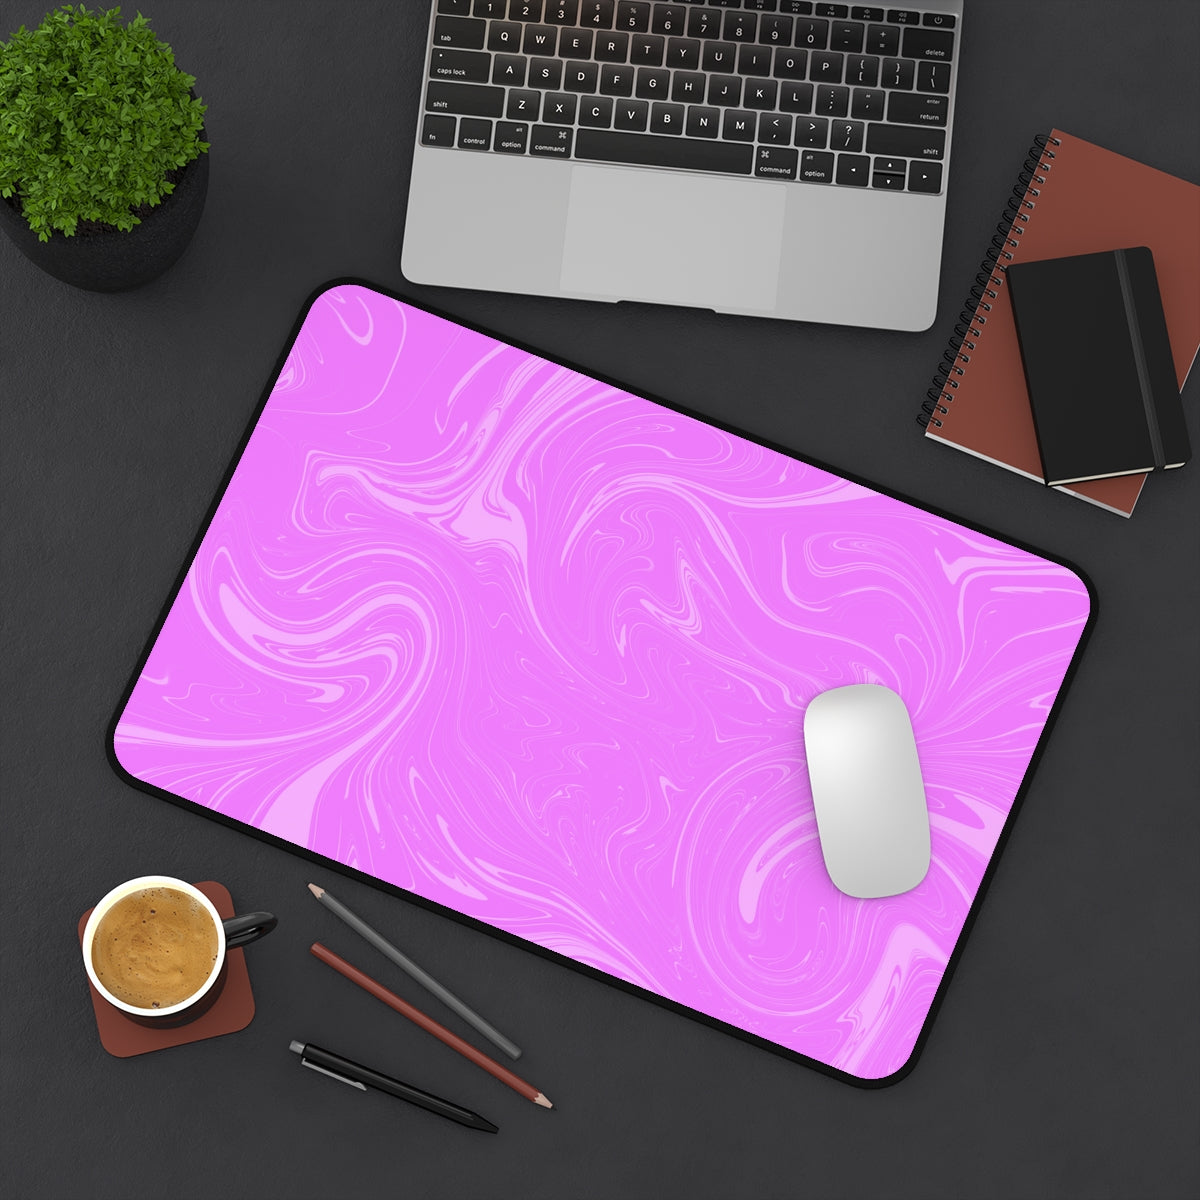 Pink Swirl Desk Mat - Desk Cookies